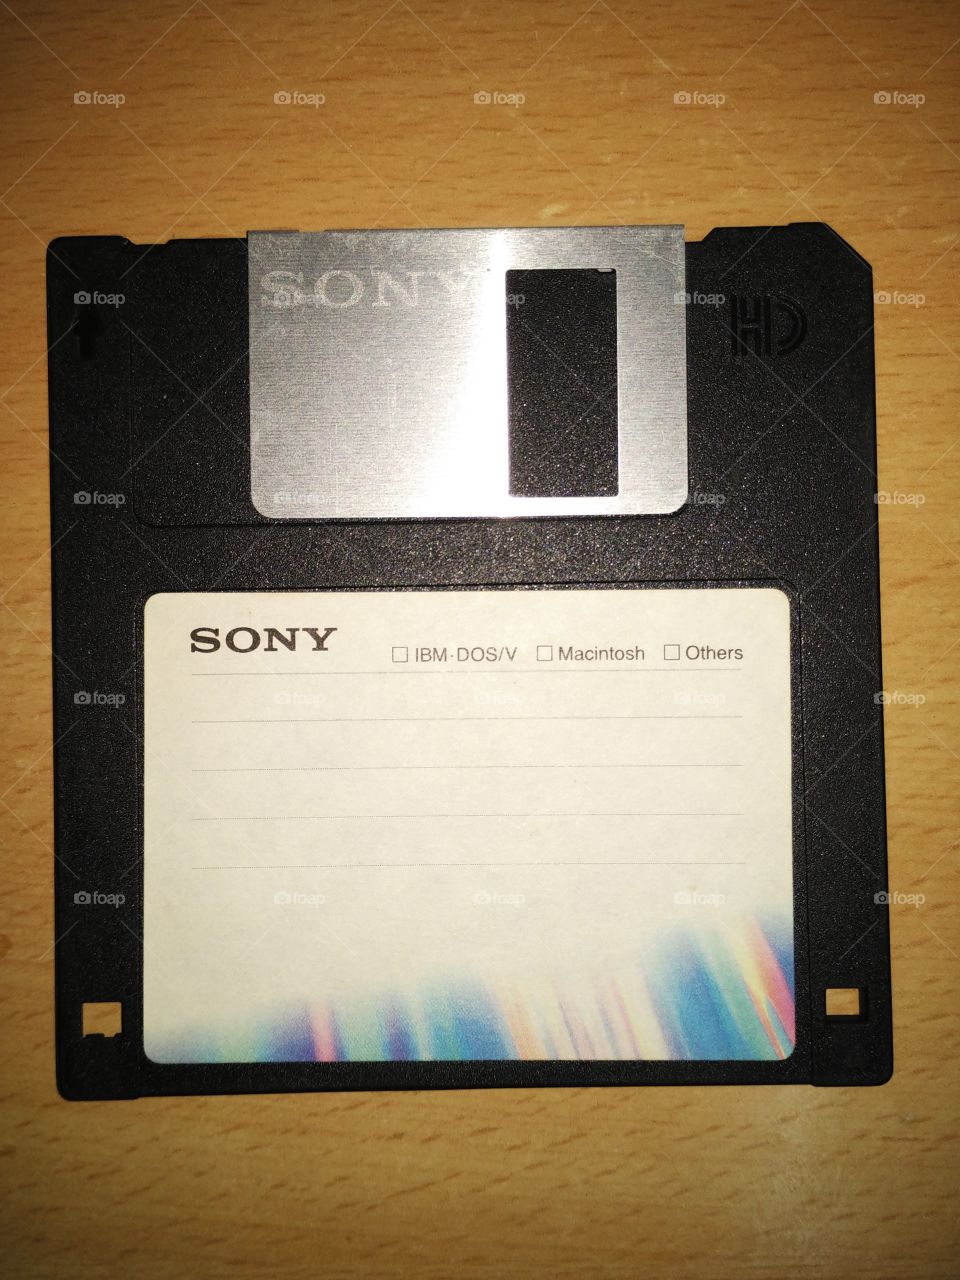 Old memories, Floppy disk